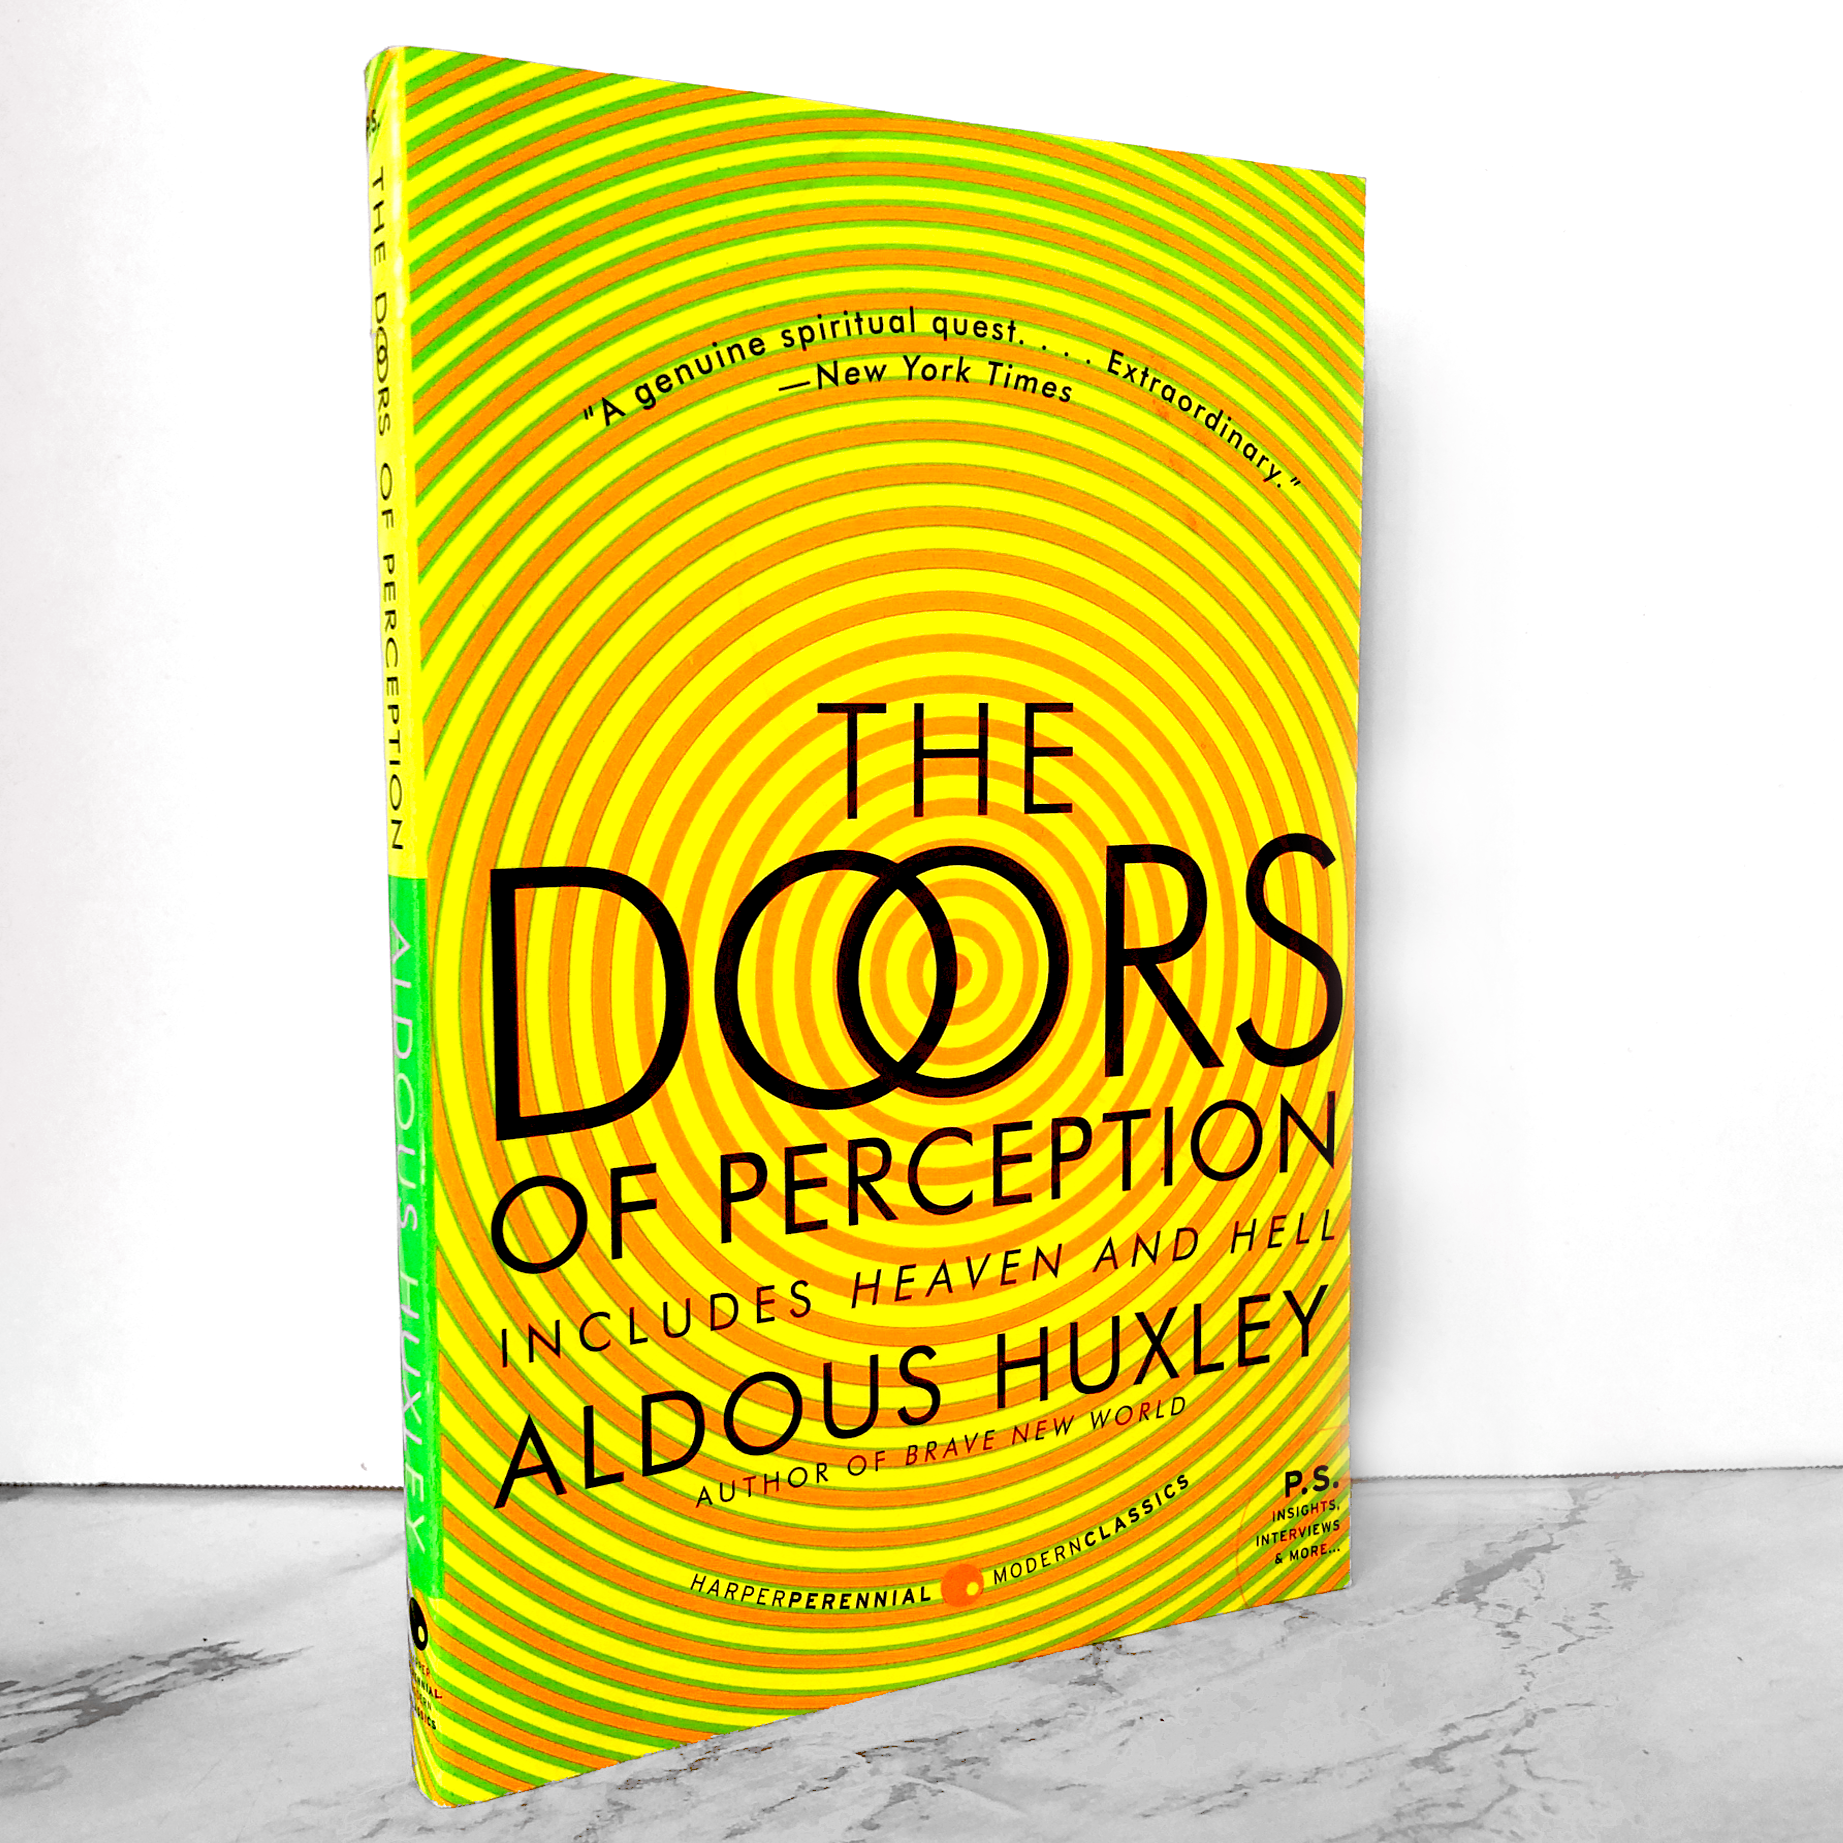 The Doors of Perception - Wikipedia